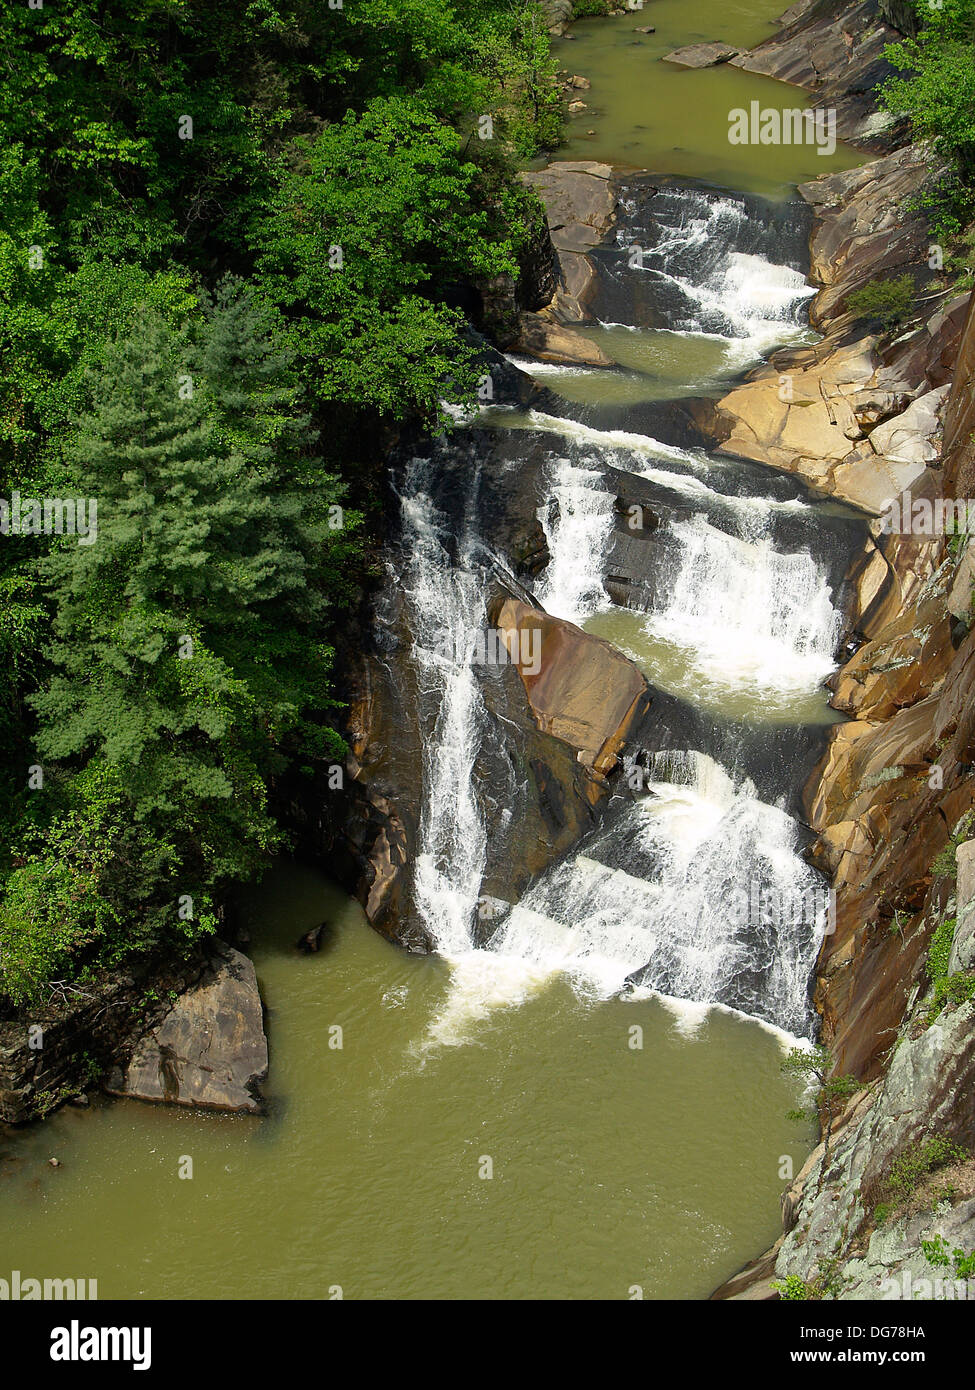 Tallulah falls state park immagini e fotografie stock ad alta ...